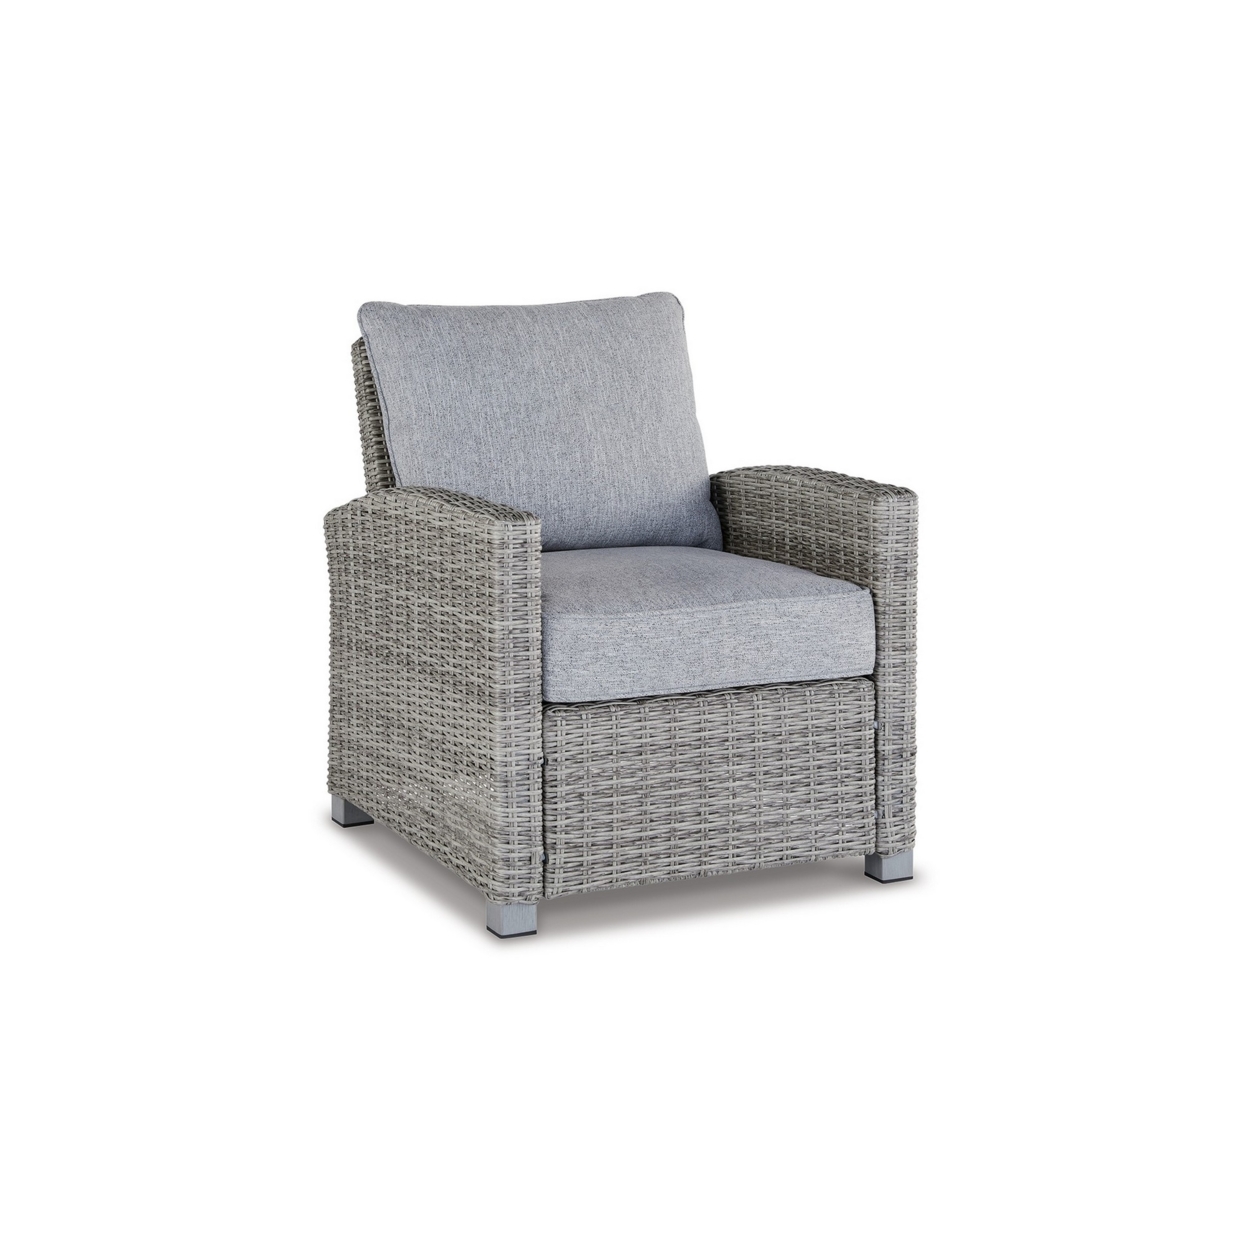 Dune 24 Inch Lounge Chair, Outdoor Gray Resin Wicker, Polyester Upholstery- Saltoro Sherpi